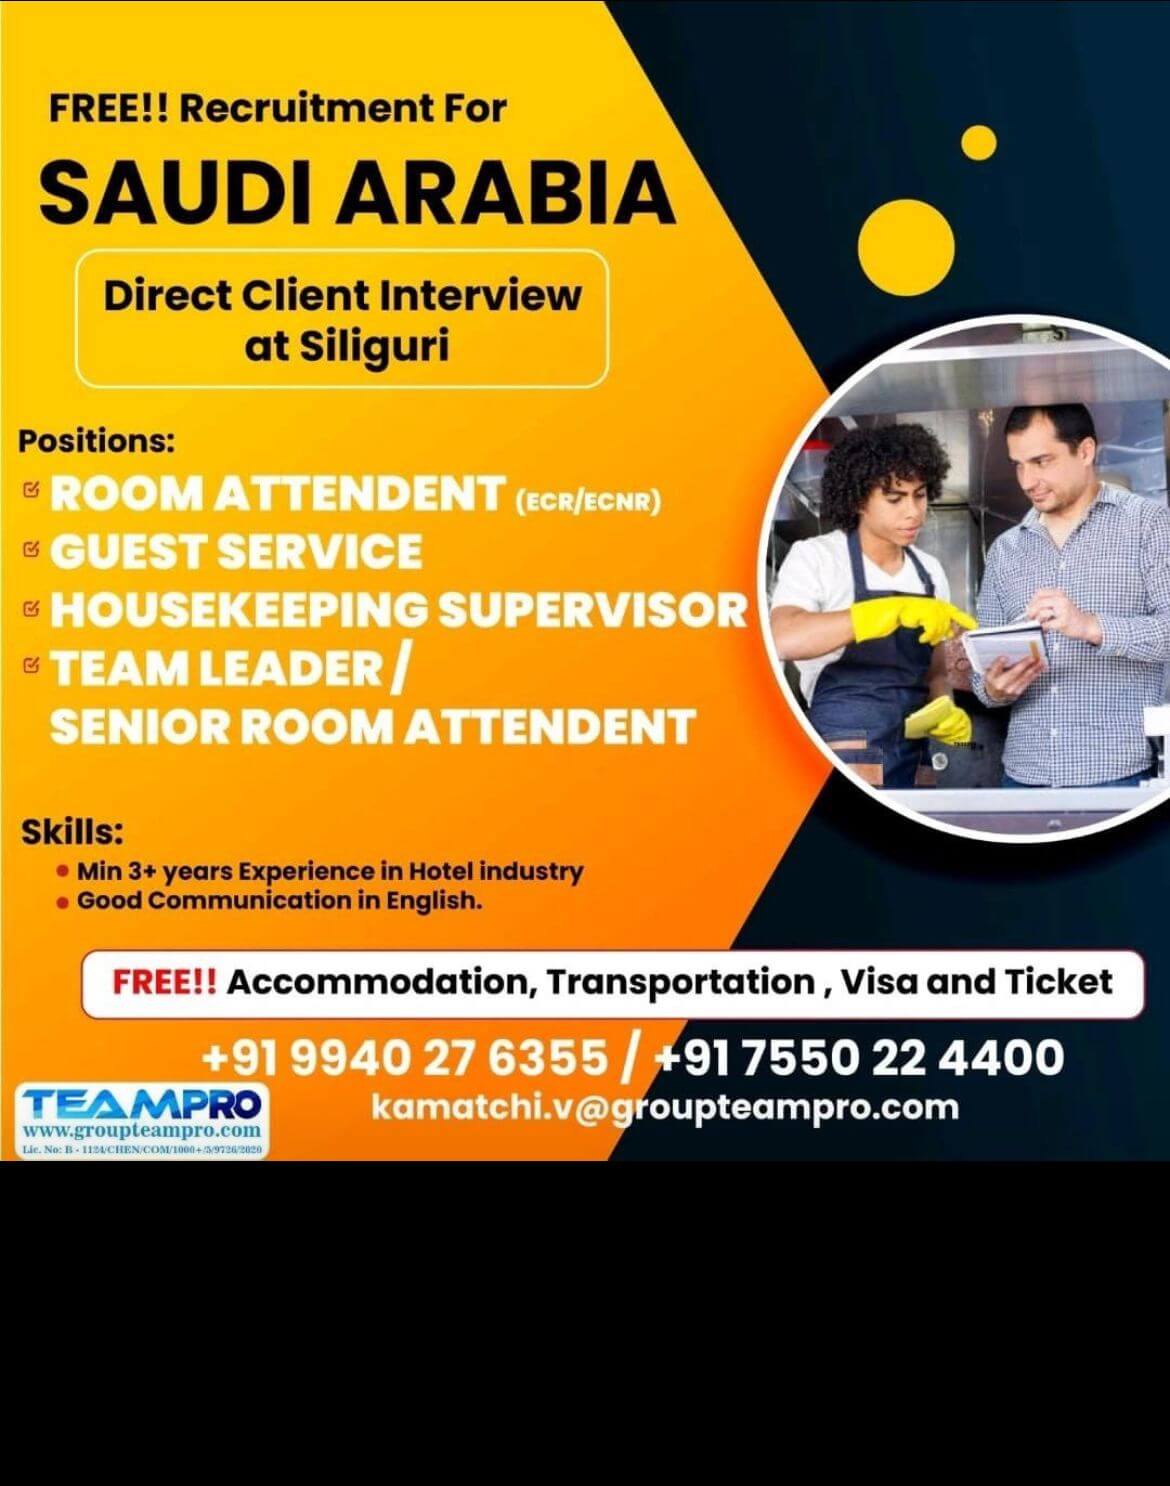 Free recruitment for Room Attendant in Saudi Arabia